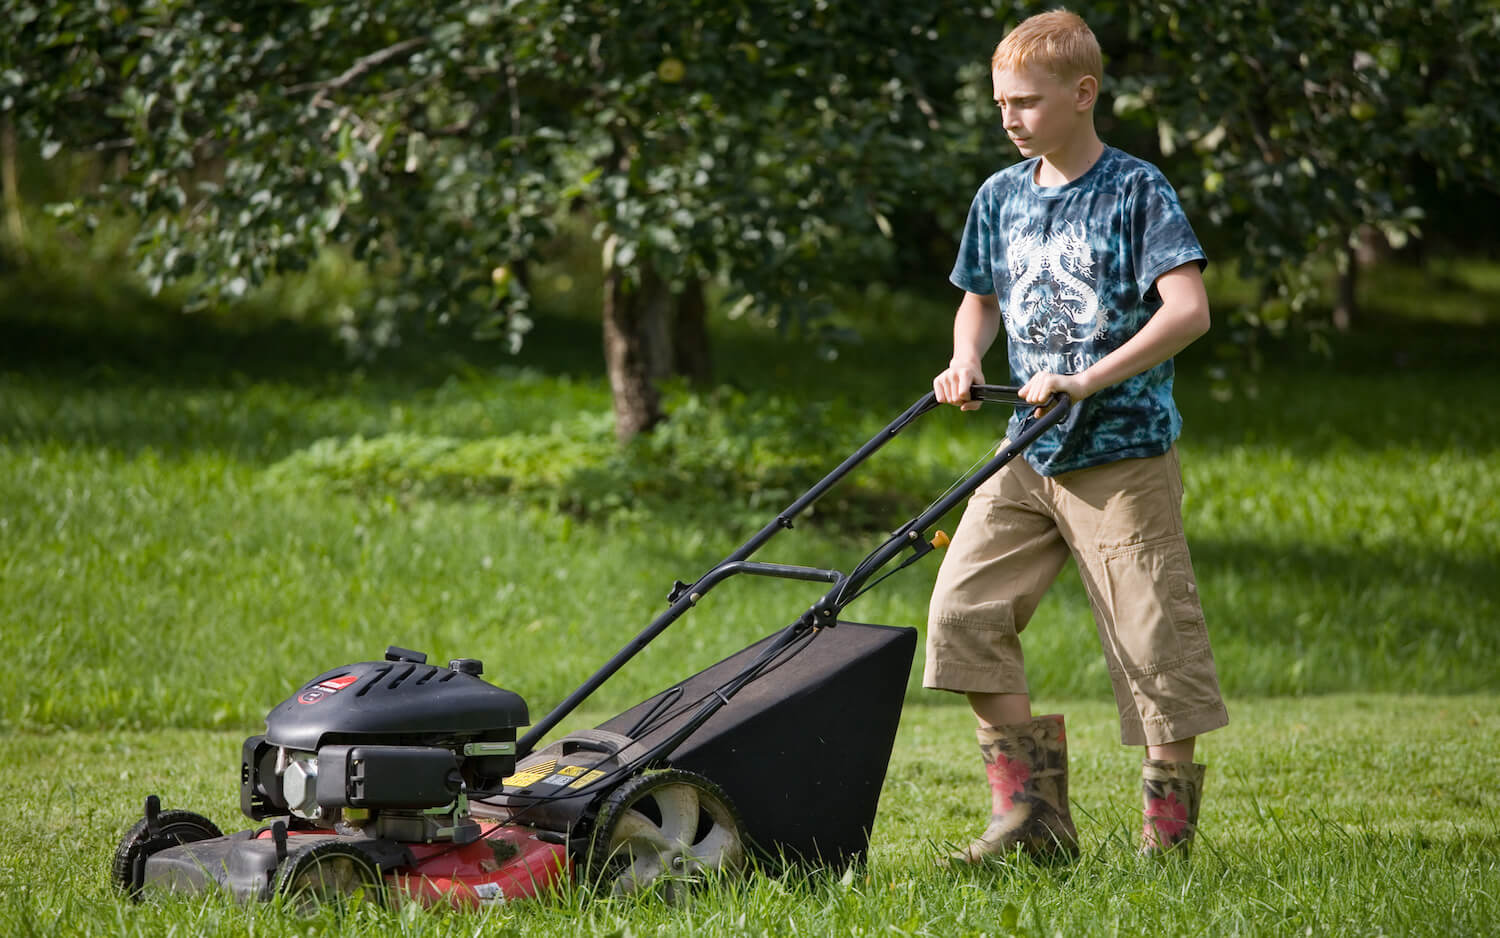 Teenage Boy Mowing Lawn Using Lawn Mower